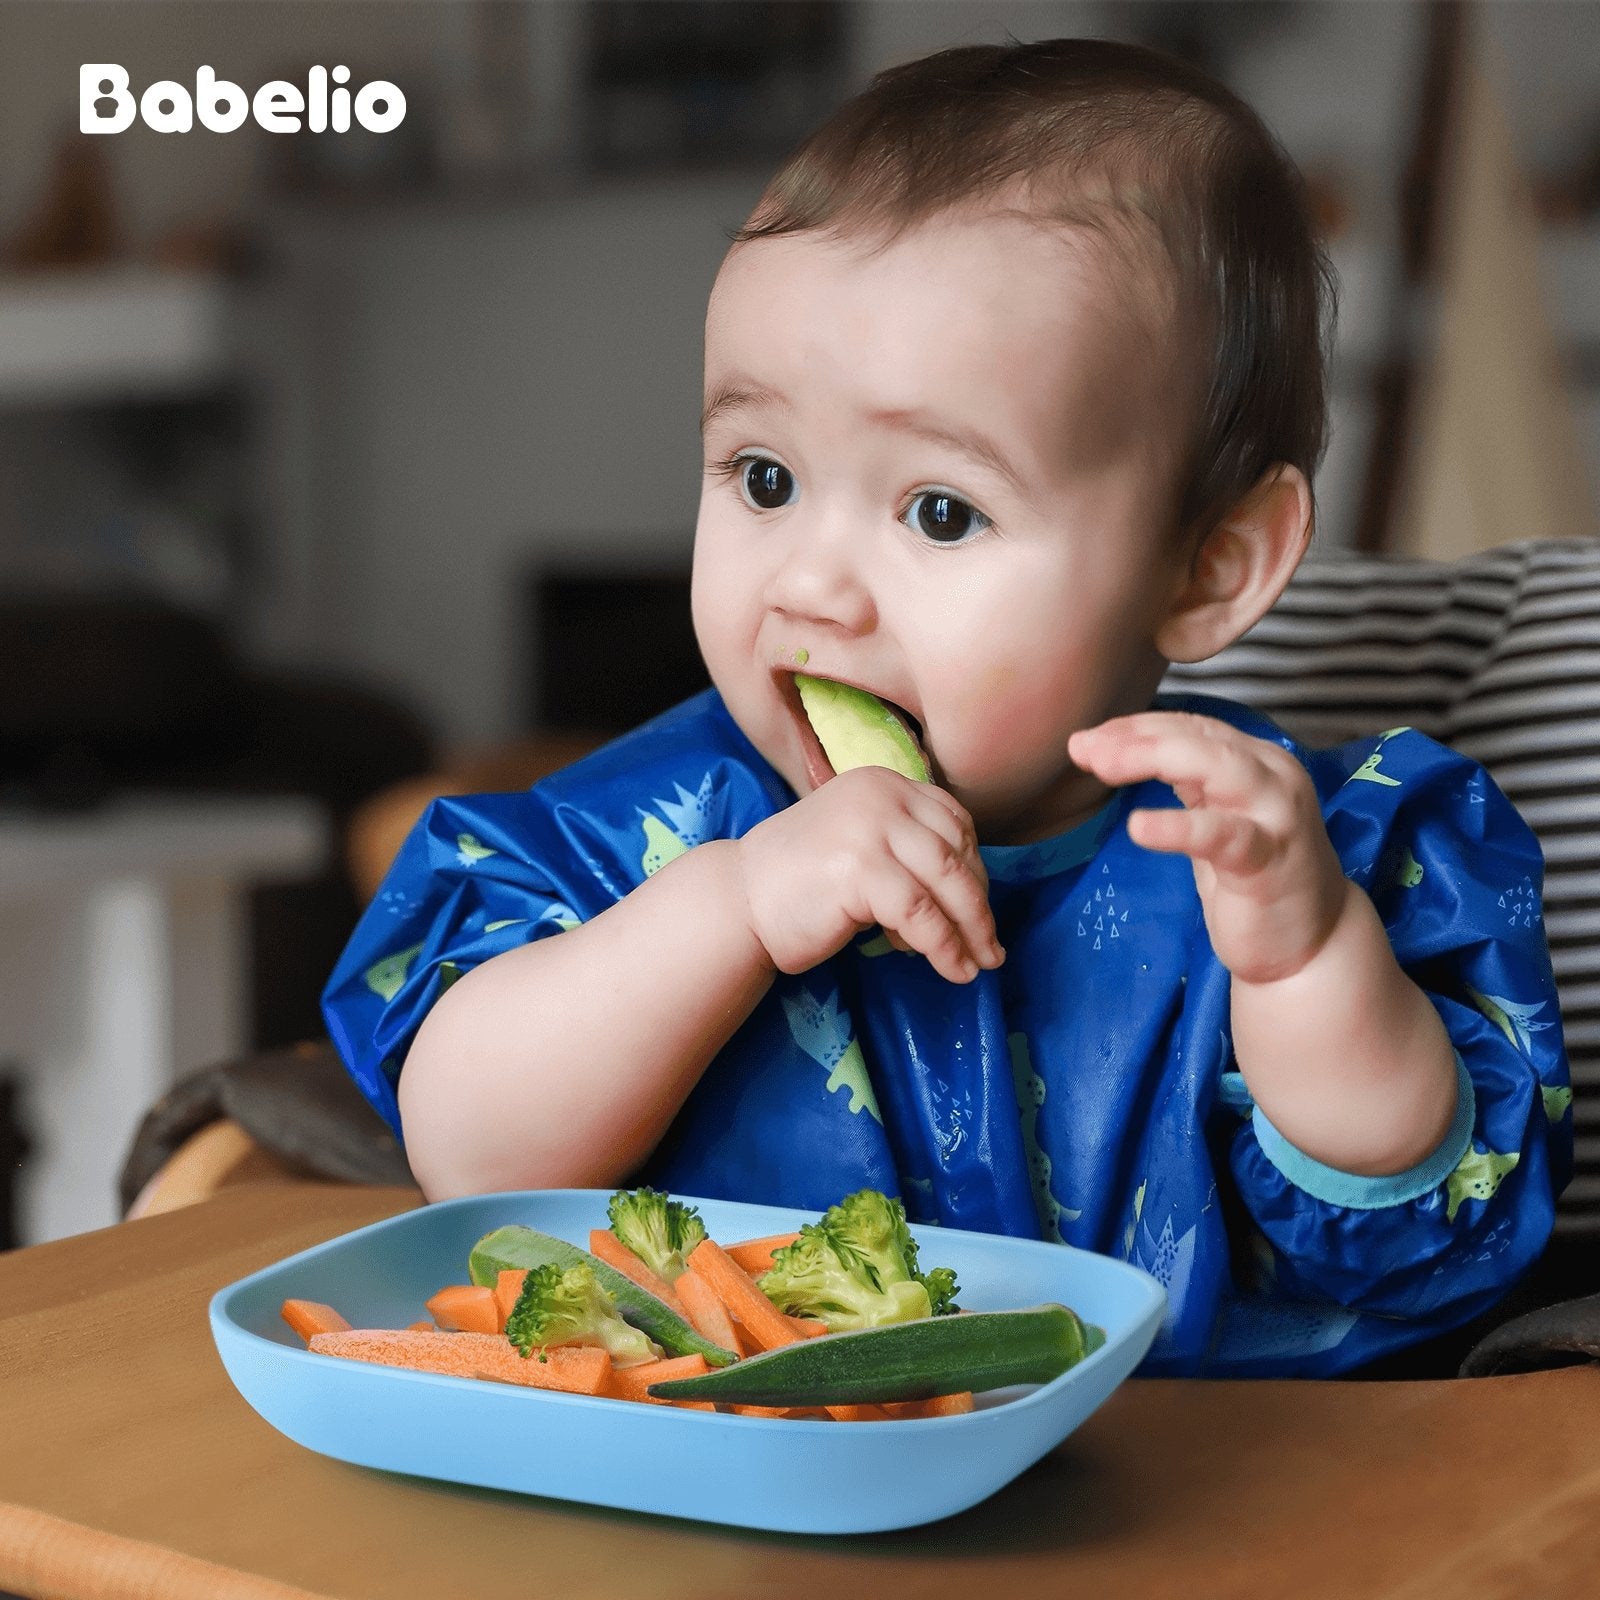 Babelio New Basics Silicone Toddler Plates 2 Pack (Sea Blue) - babeliobaby